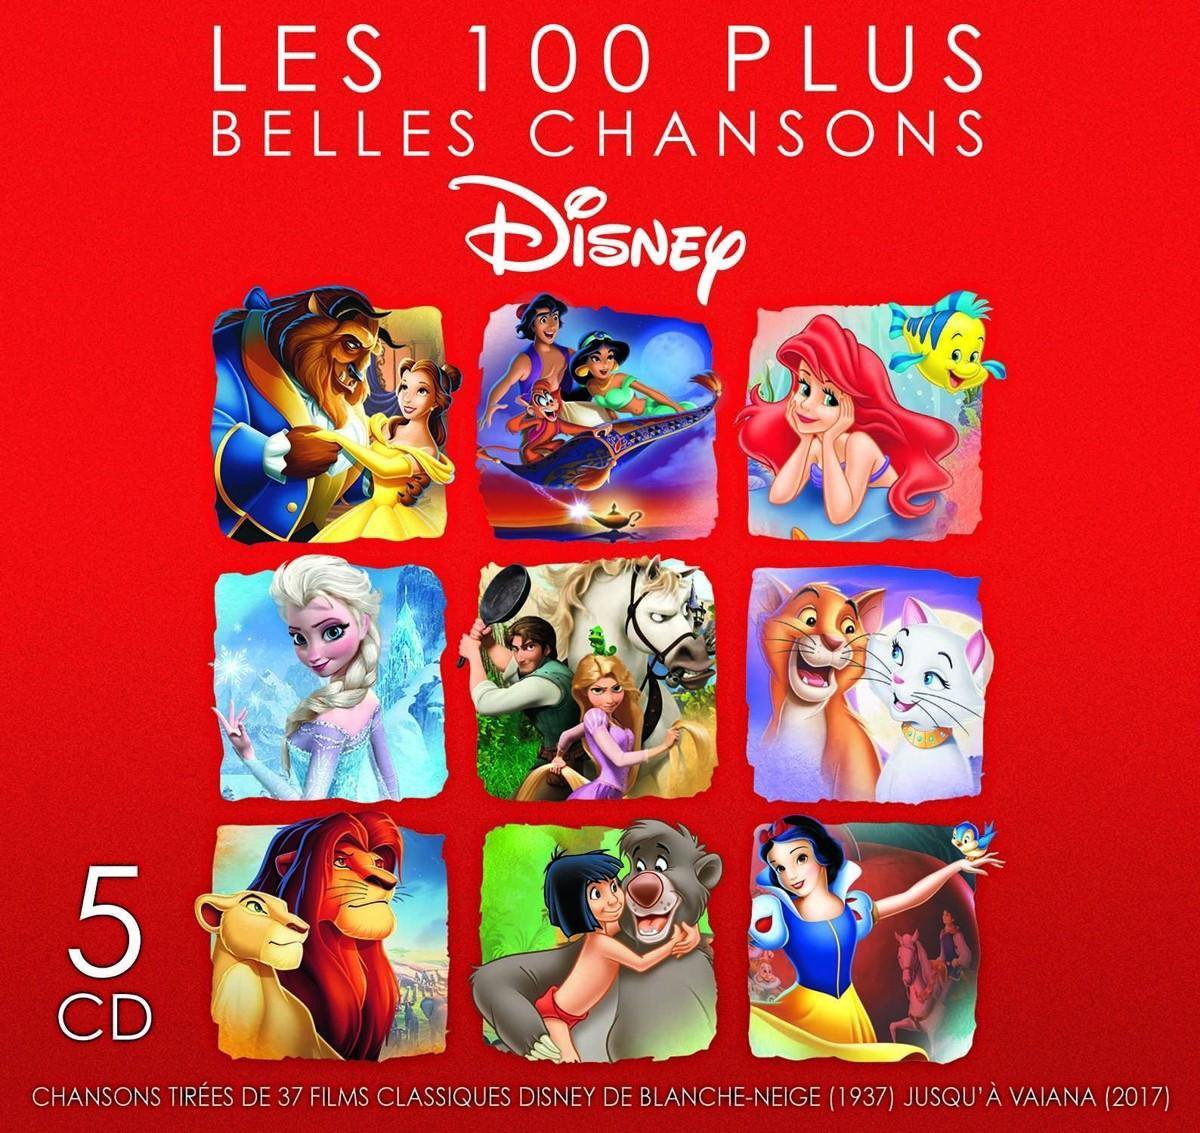 Accor Uitreiken Zonnig Les 100 Plus Belles Chansons Disney, Various | CD (album) | Muziek | bol.com